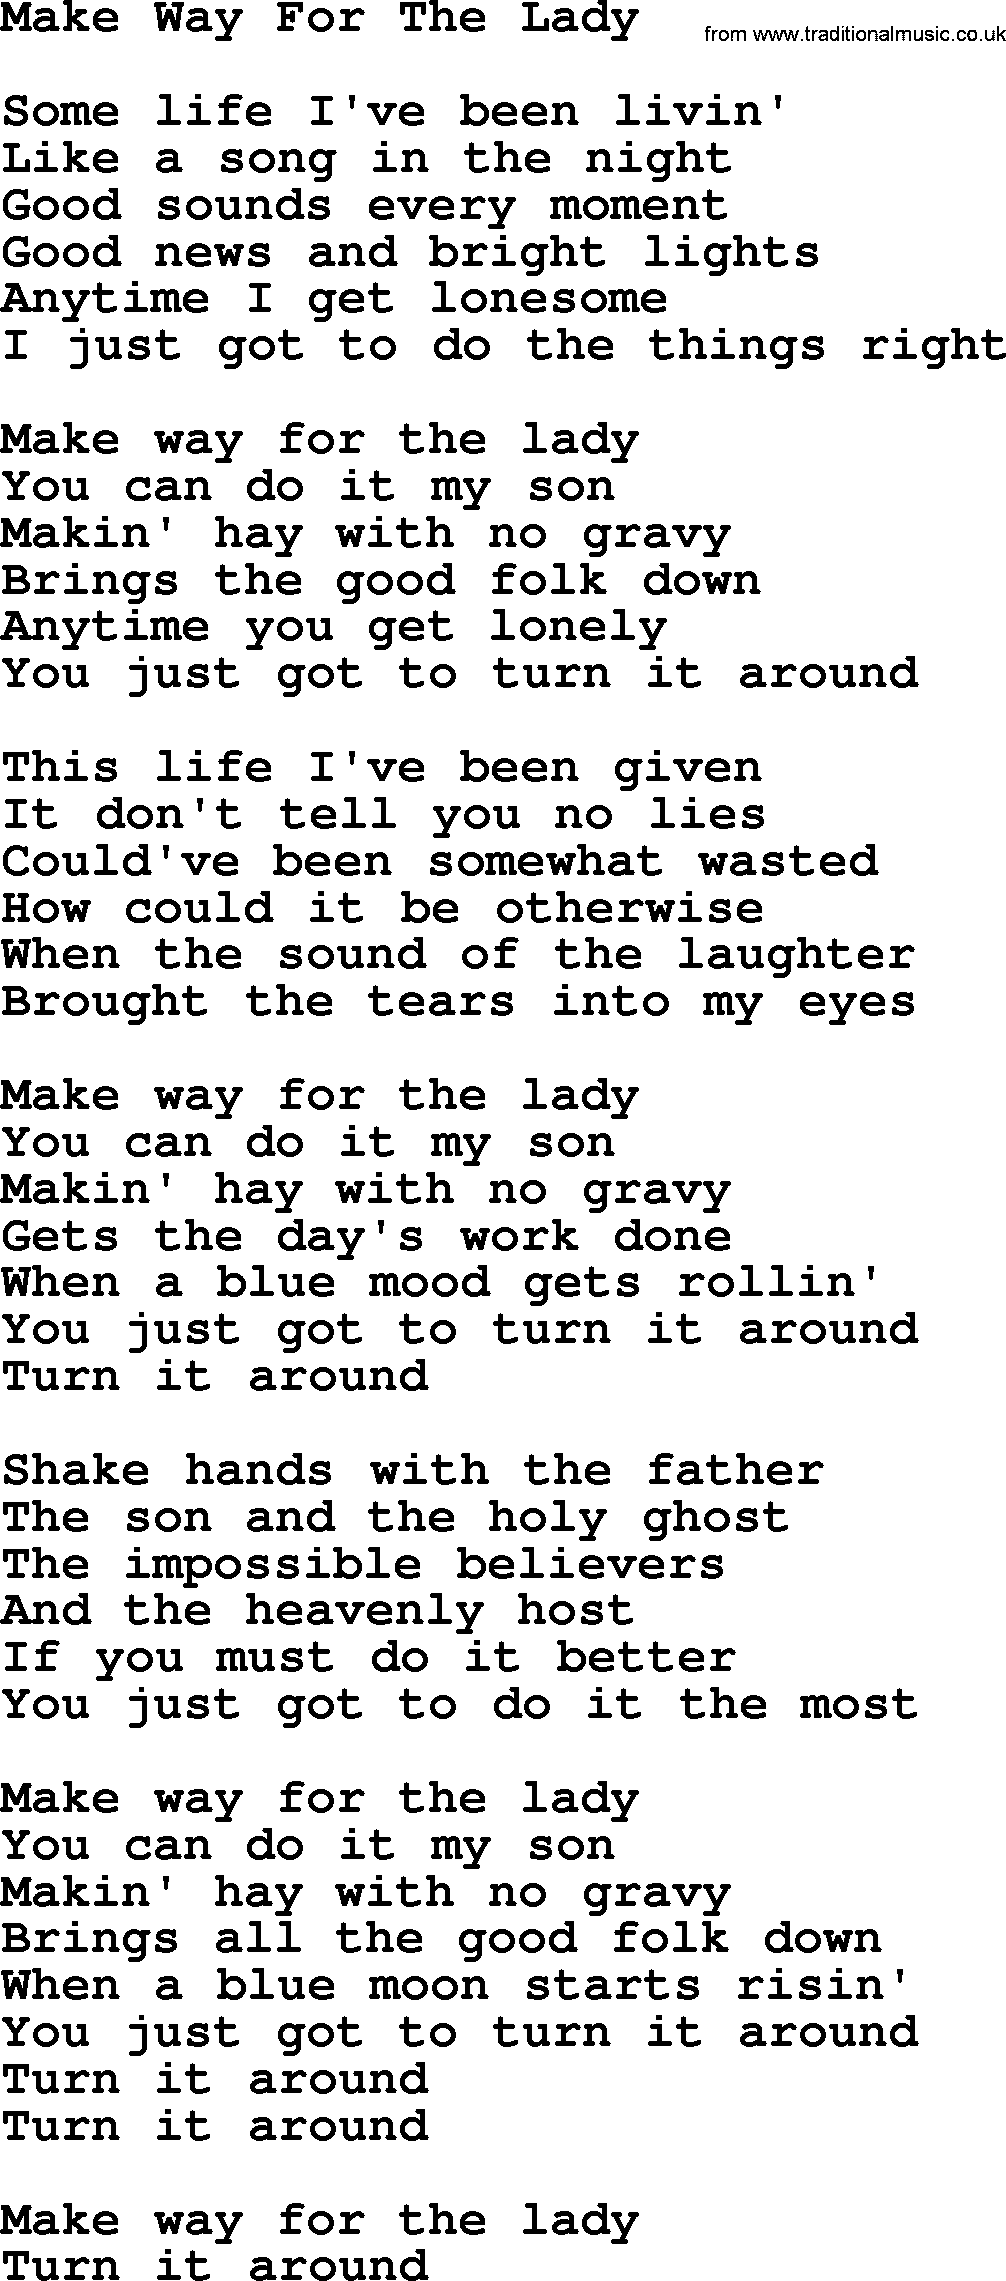 Gordon Lightfoot song Make Way For The Lady, lyrics